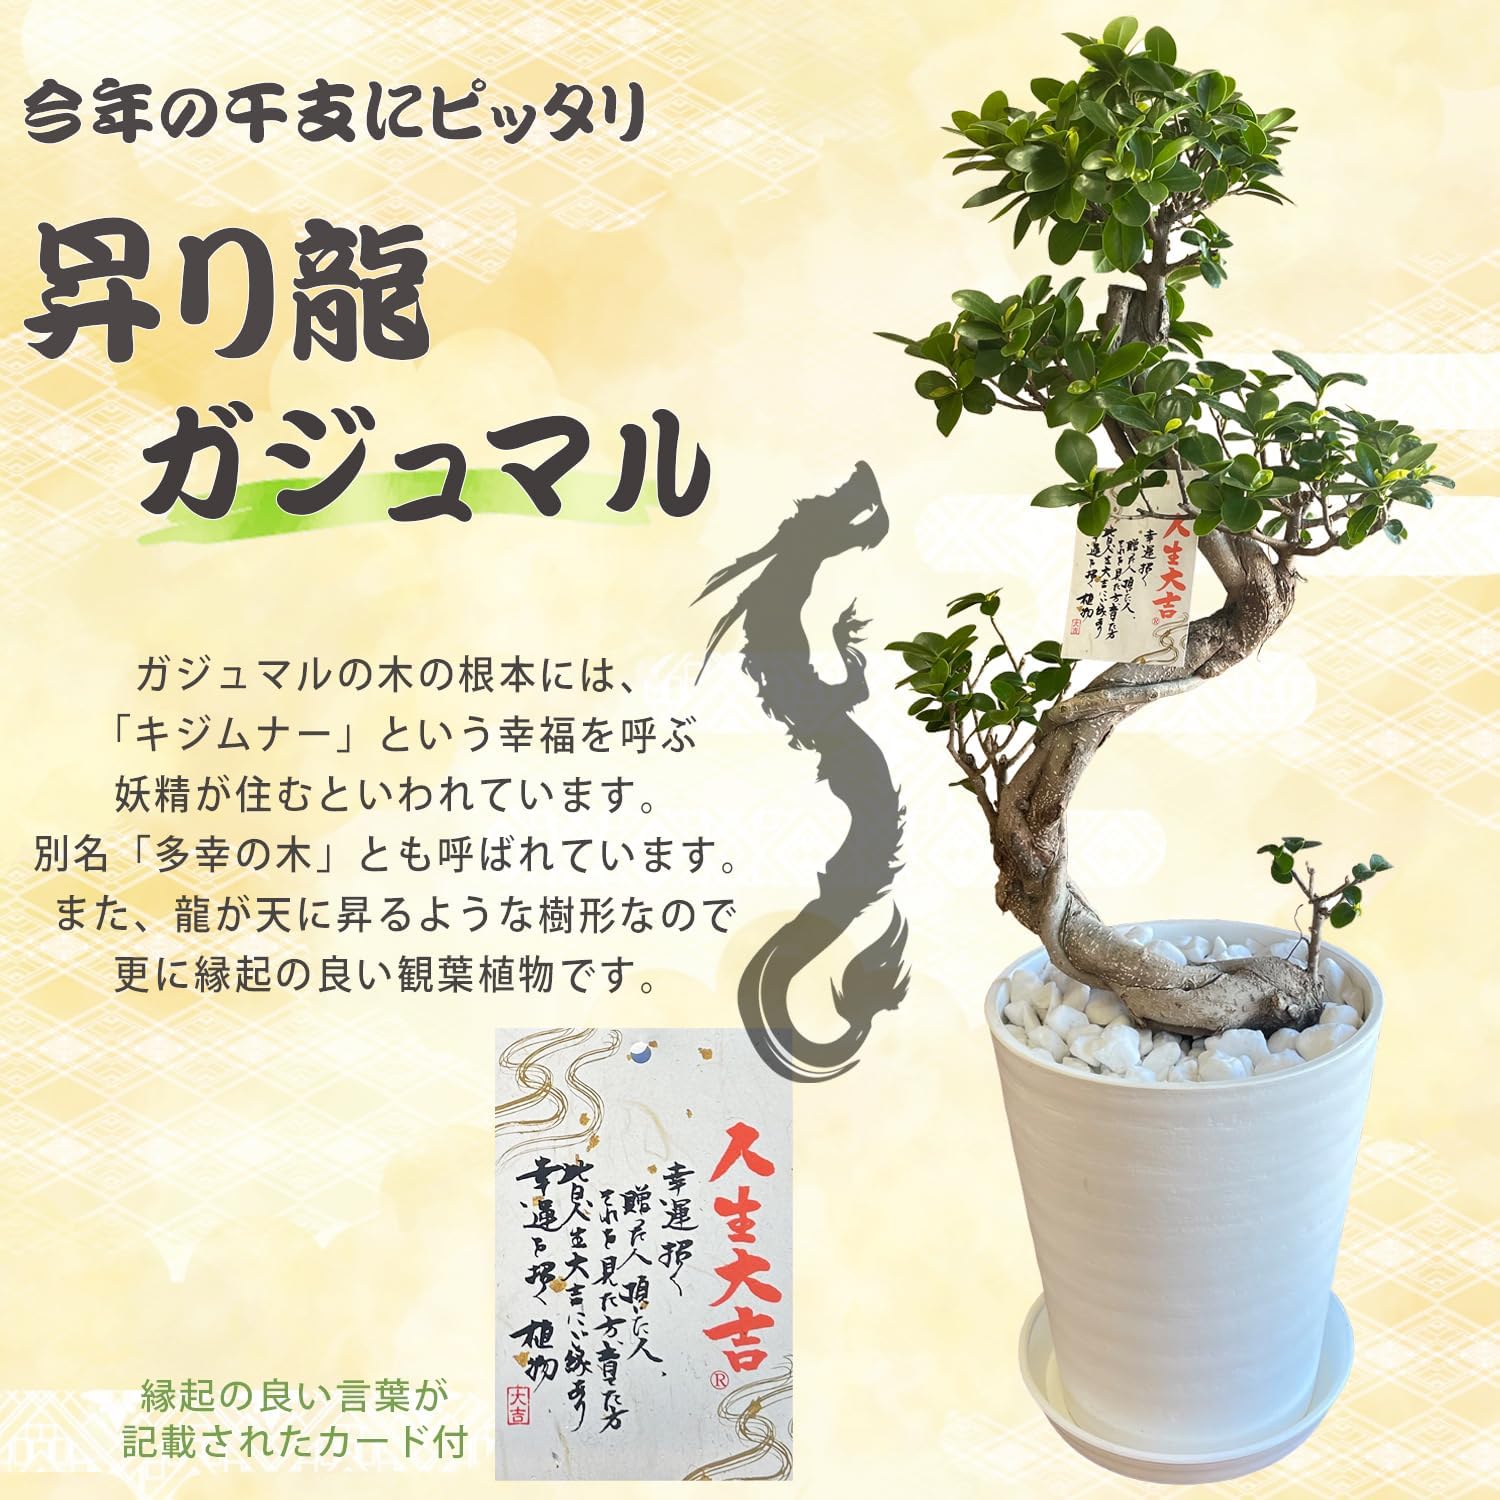 gaju maru decorative plant large gaju maru. tree .. dragon 8 number pot gift stylish decorative plant potted plant opening festival . celebration present present Okinawa 